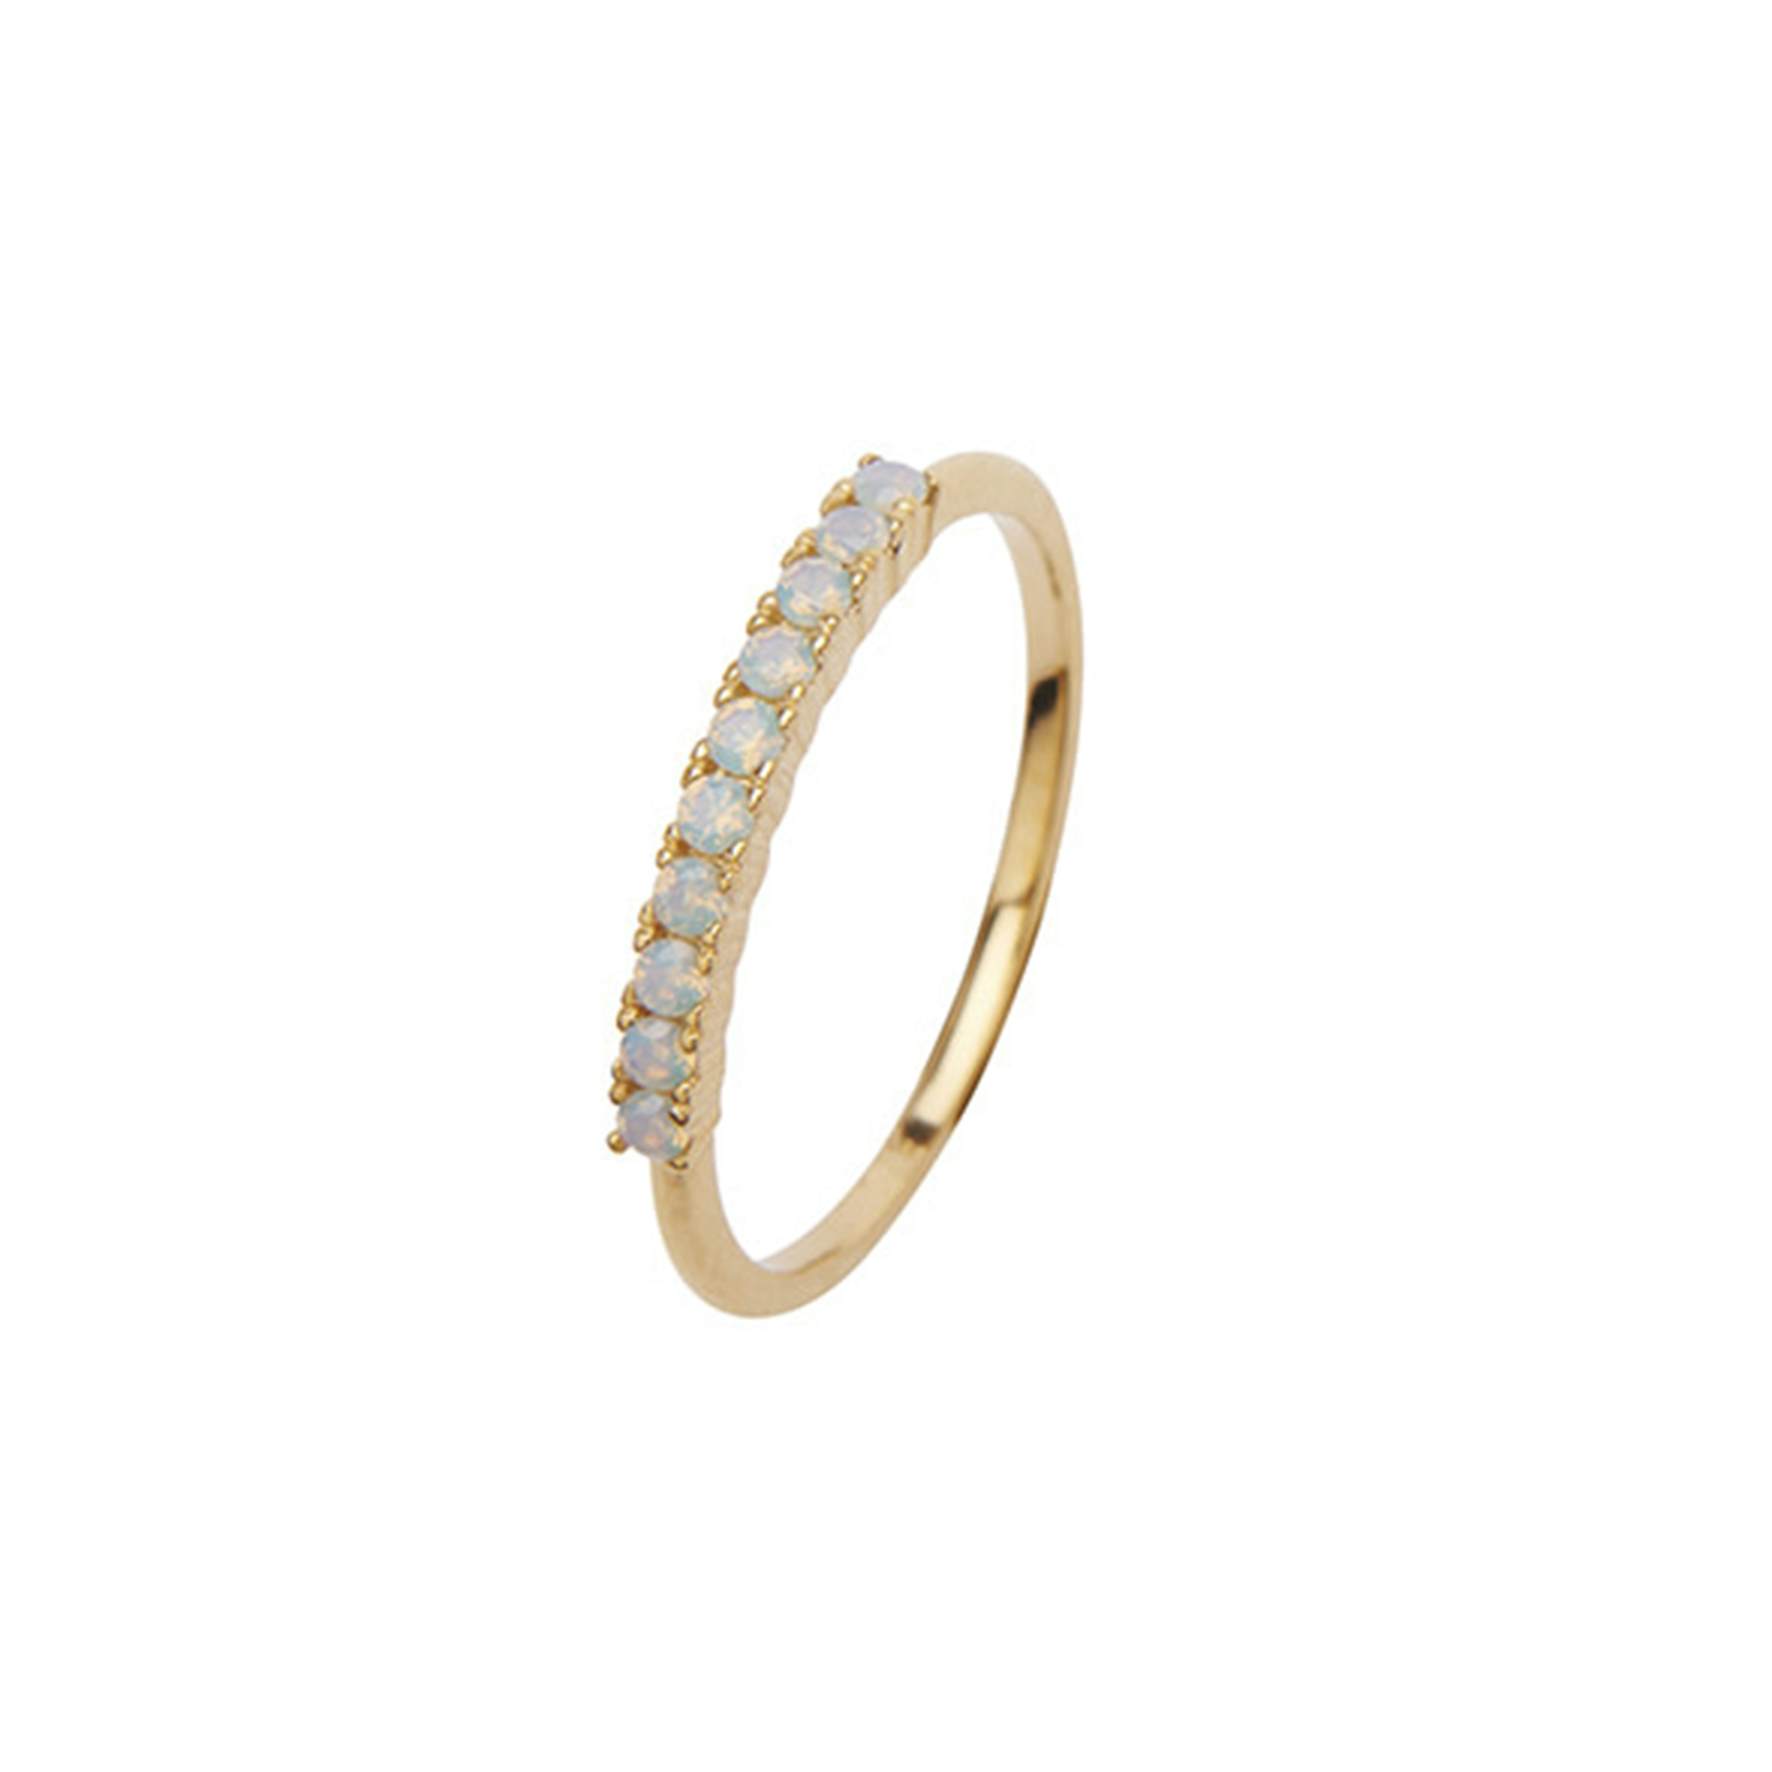 Fineley Crystal Ring fra Pico i Forgylt-Sølv Sterling 925|Mint